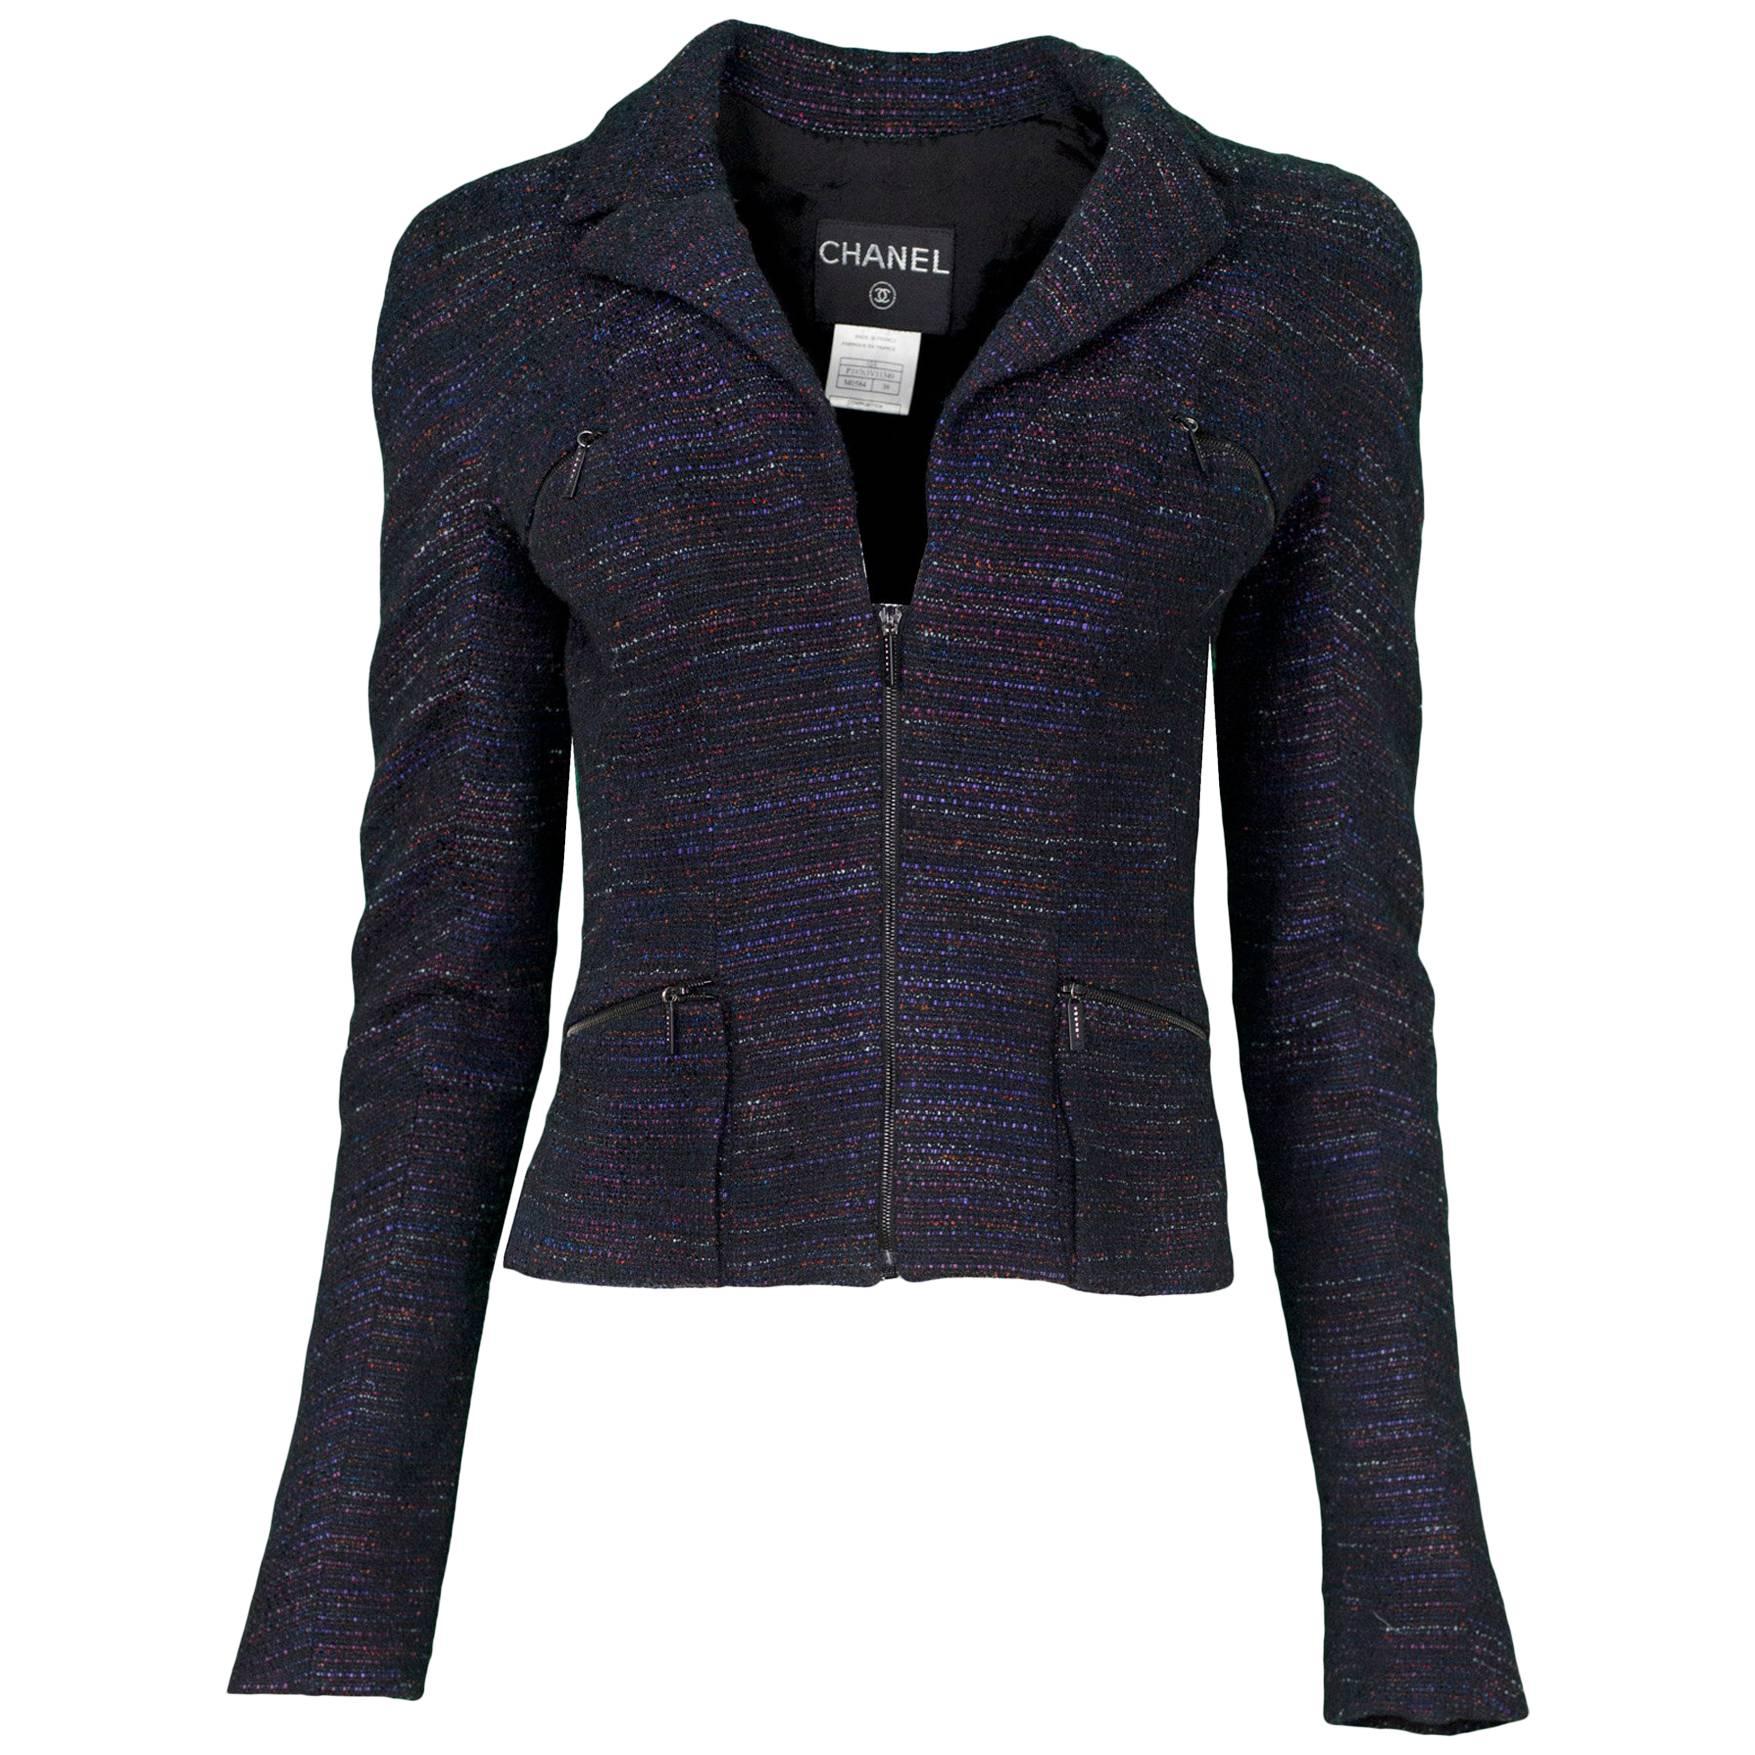 Chanel Multi-Colored Tweed Jacket sz FR38